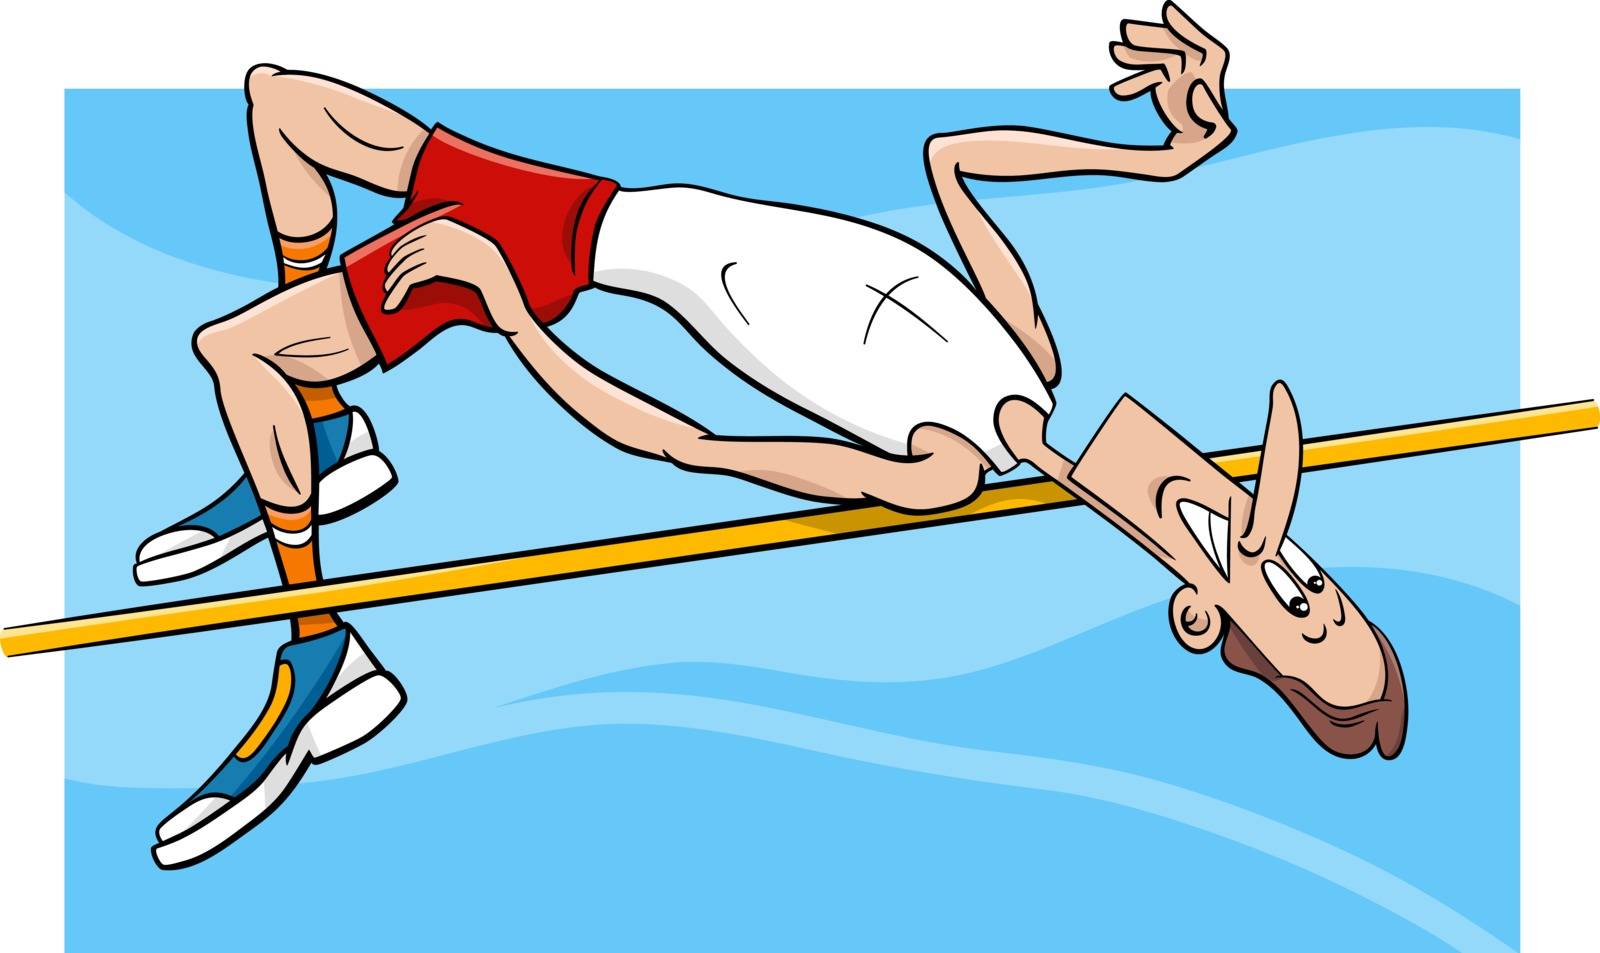 Cartoon Illustrations of High Jump Sportsman or Athlete Training